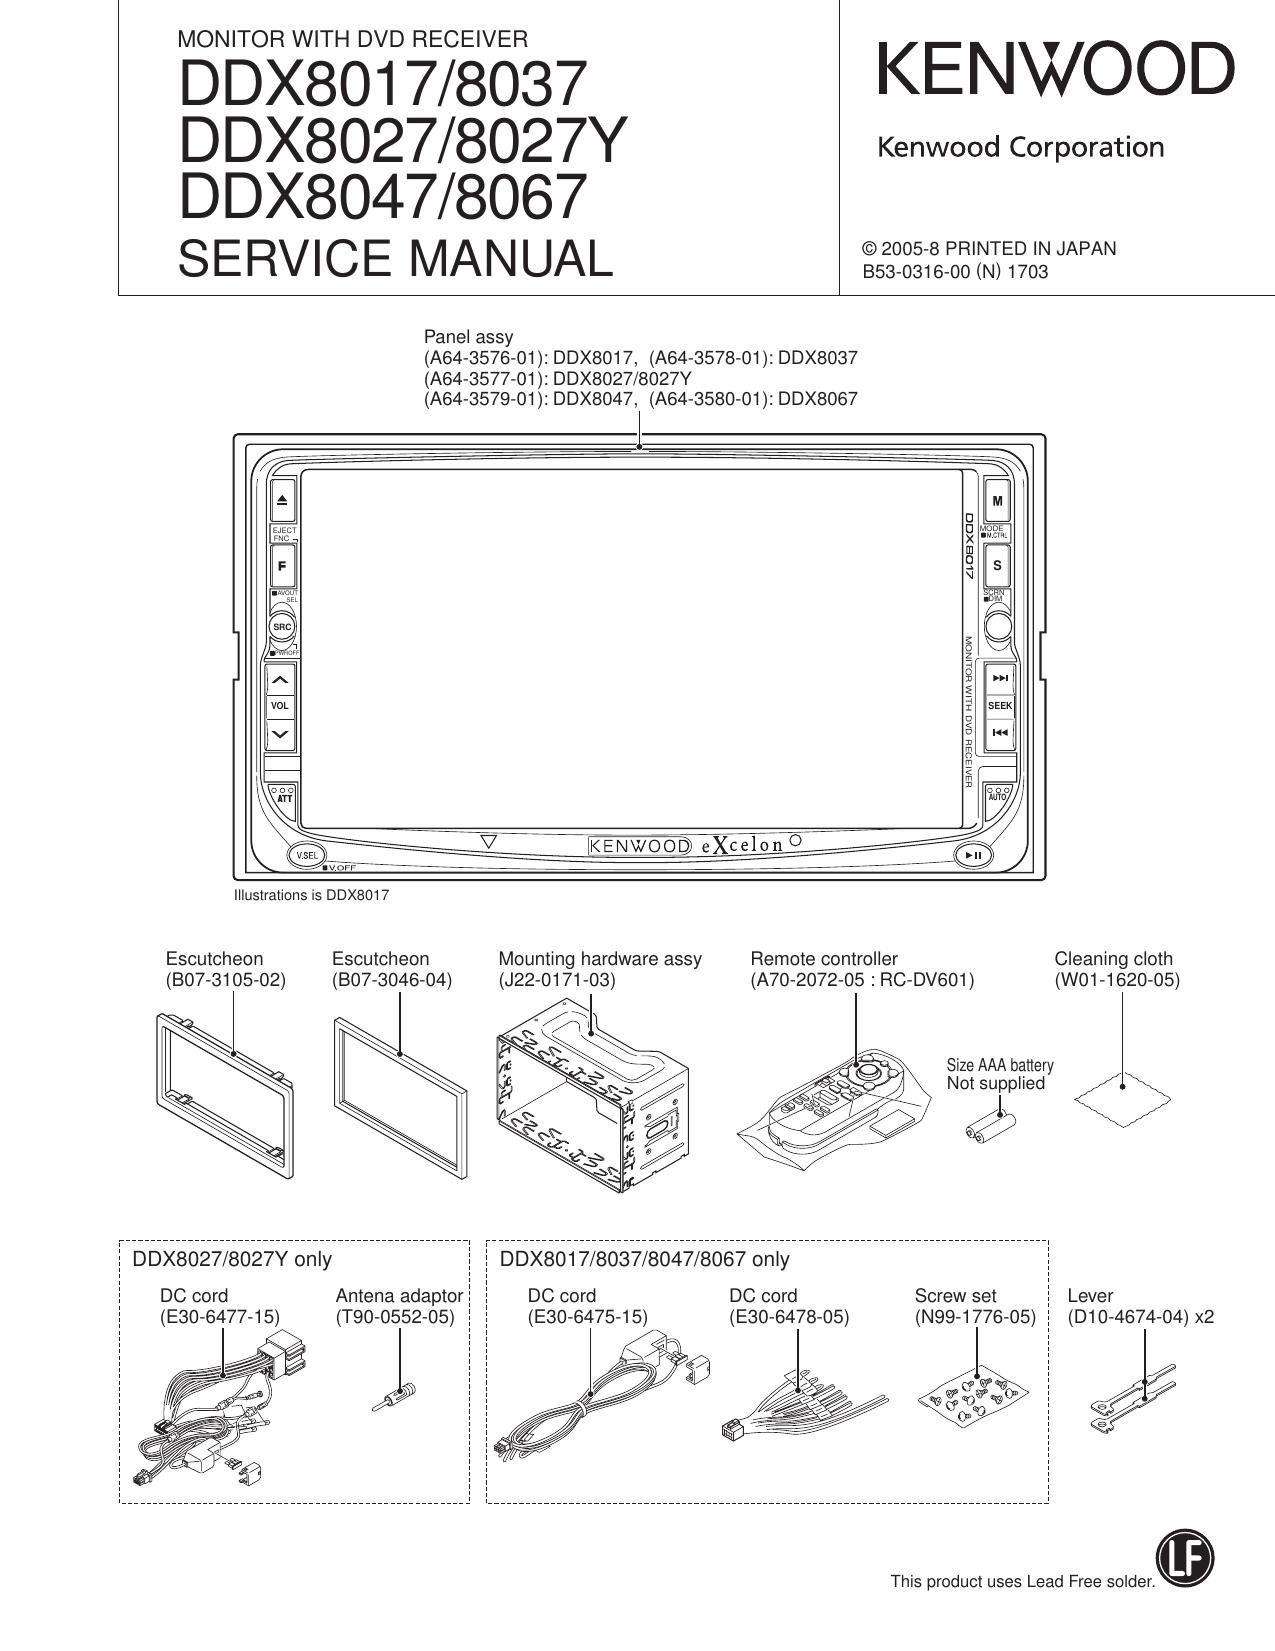 Kenwood DDX 8067 Service Manual